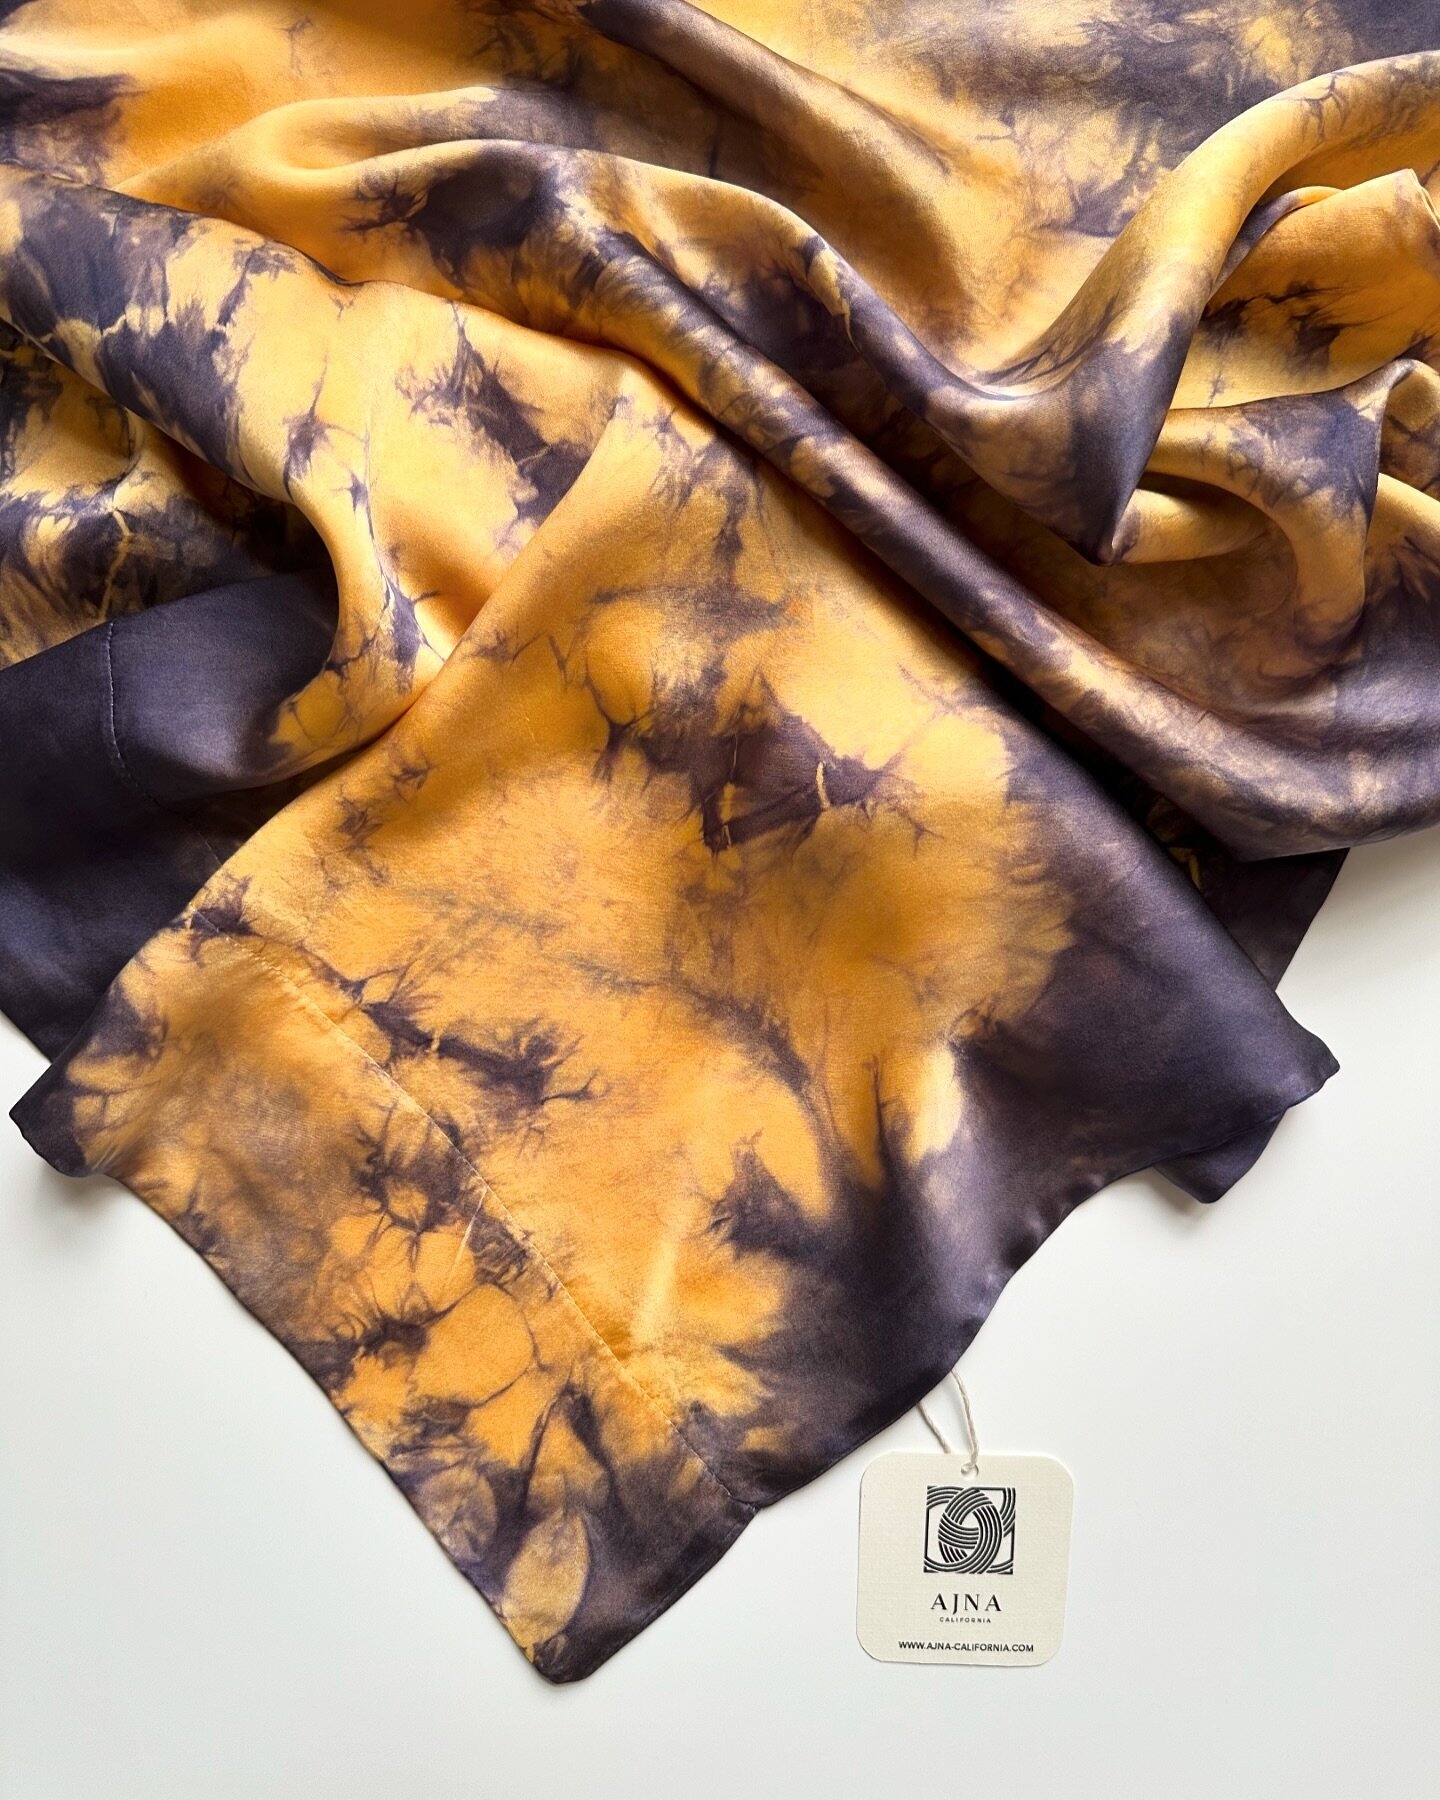 Naturally dyed silk pillowcase✨

#naturallydyed #botanicallydyed #silkpillowcase #ajnacalifornia